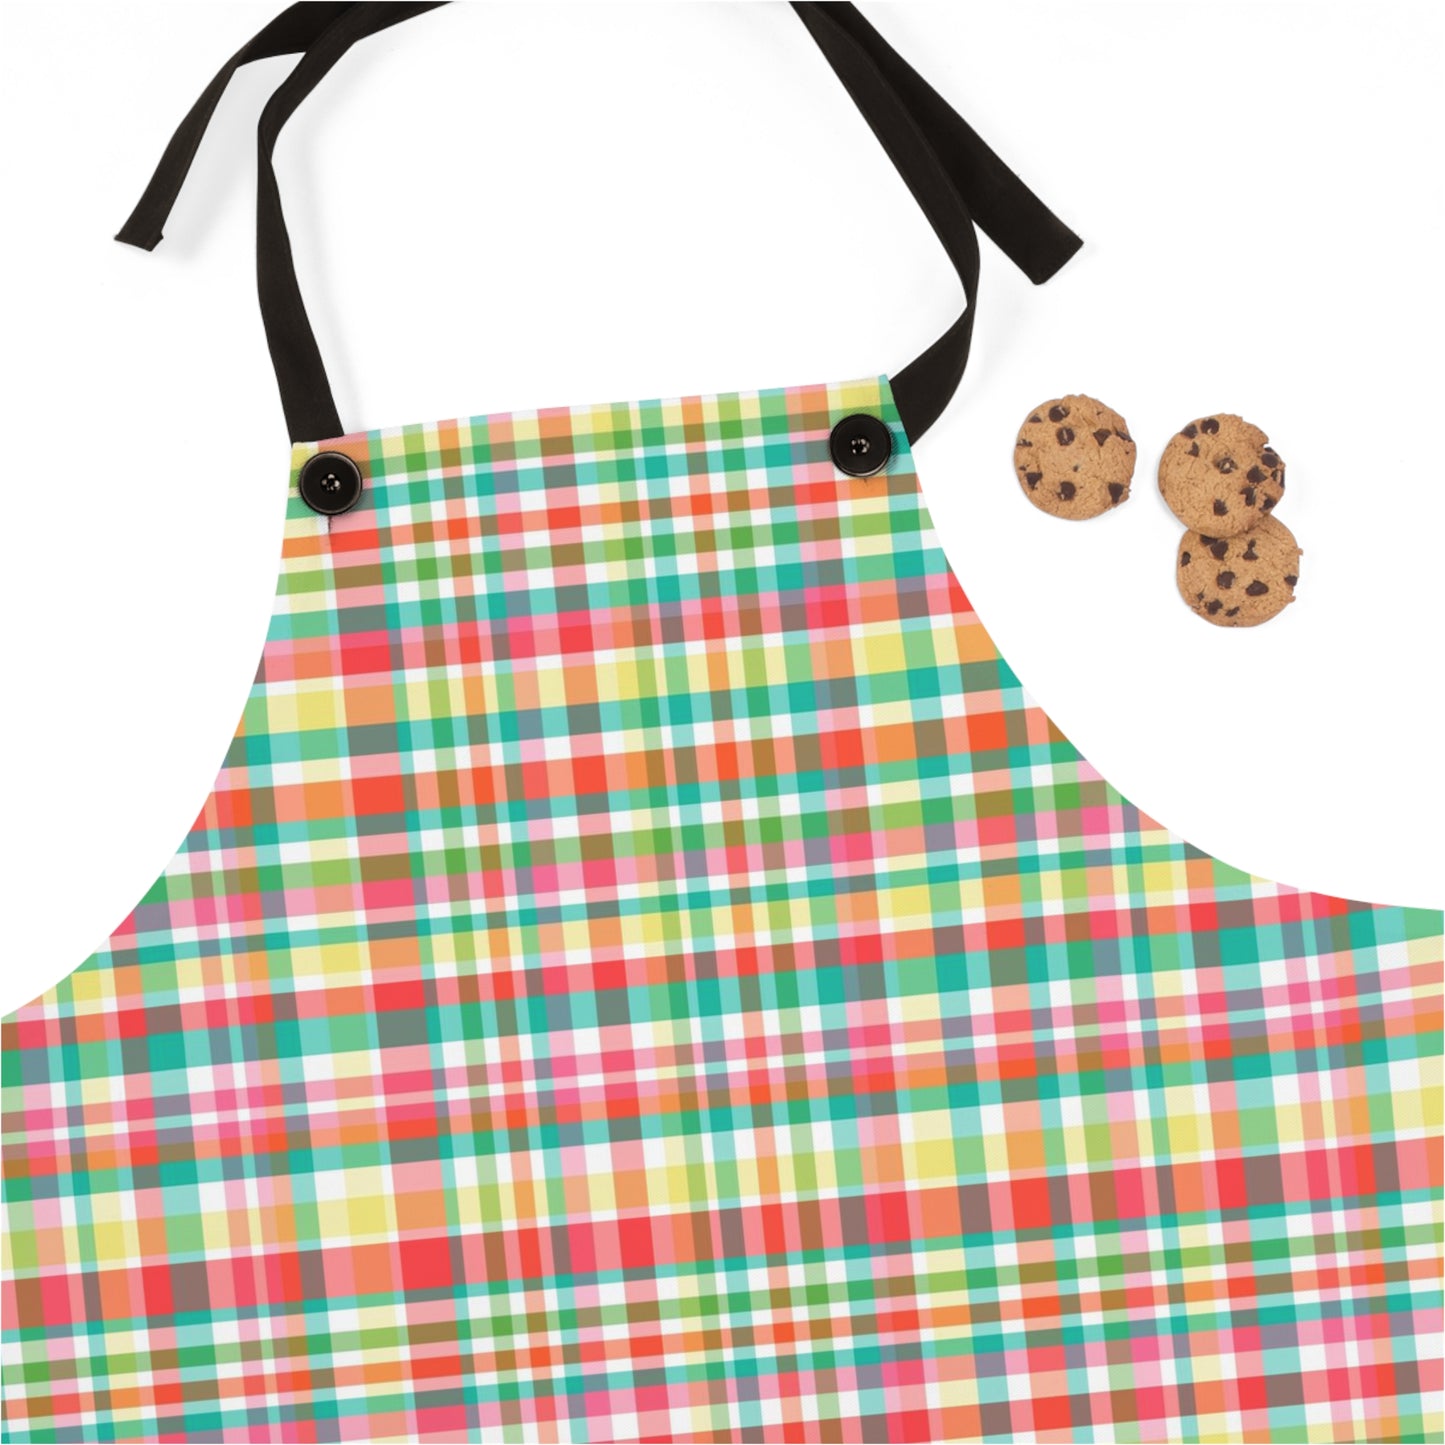 Hibiscus Garden Plaid Apron, kitchen accessory, cooking accessory, plaid apron, custom designed apron